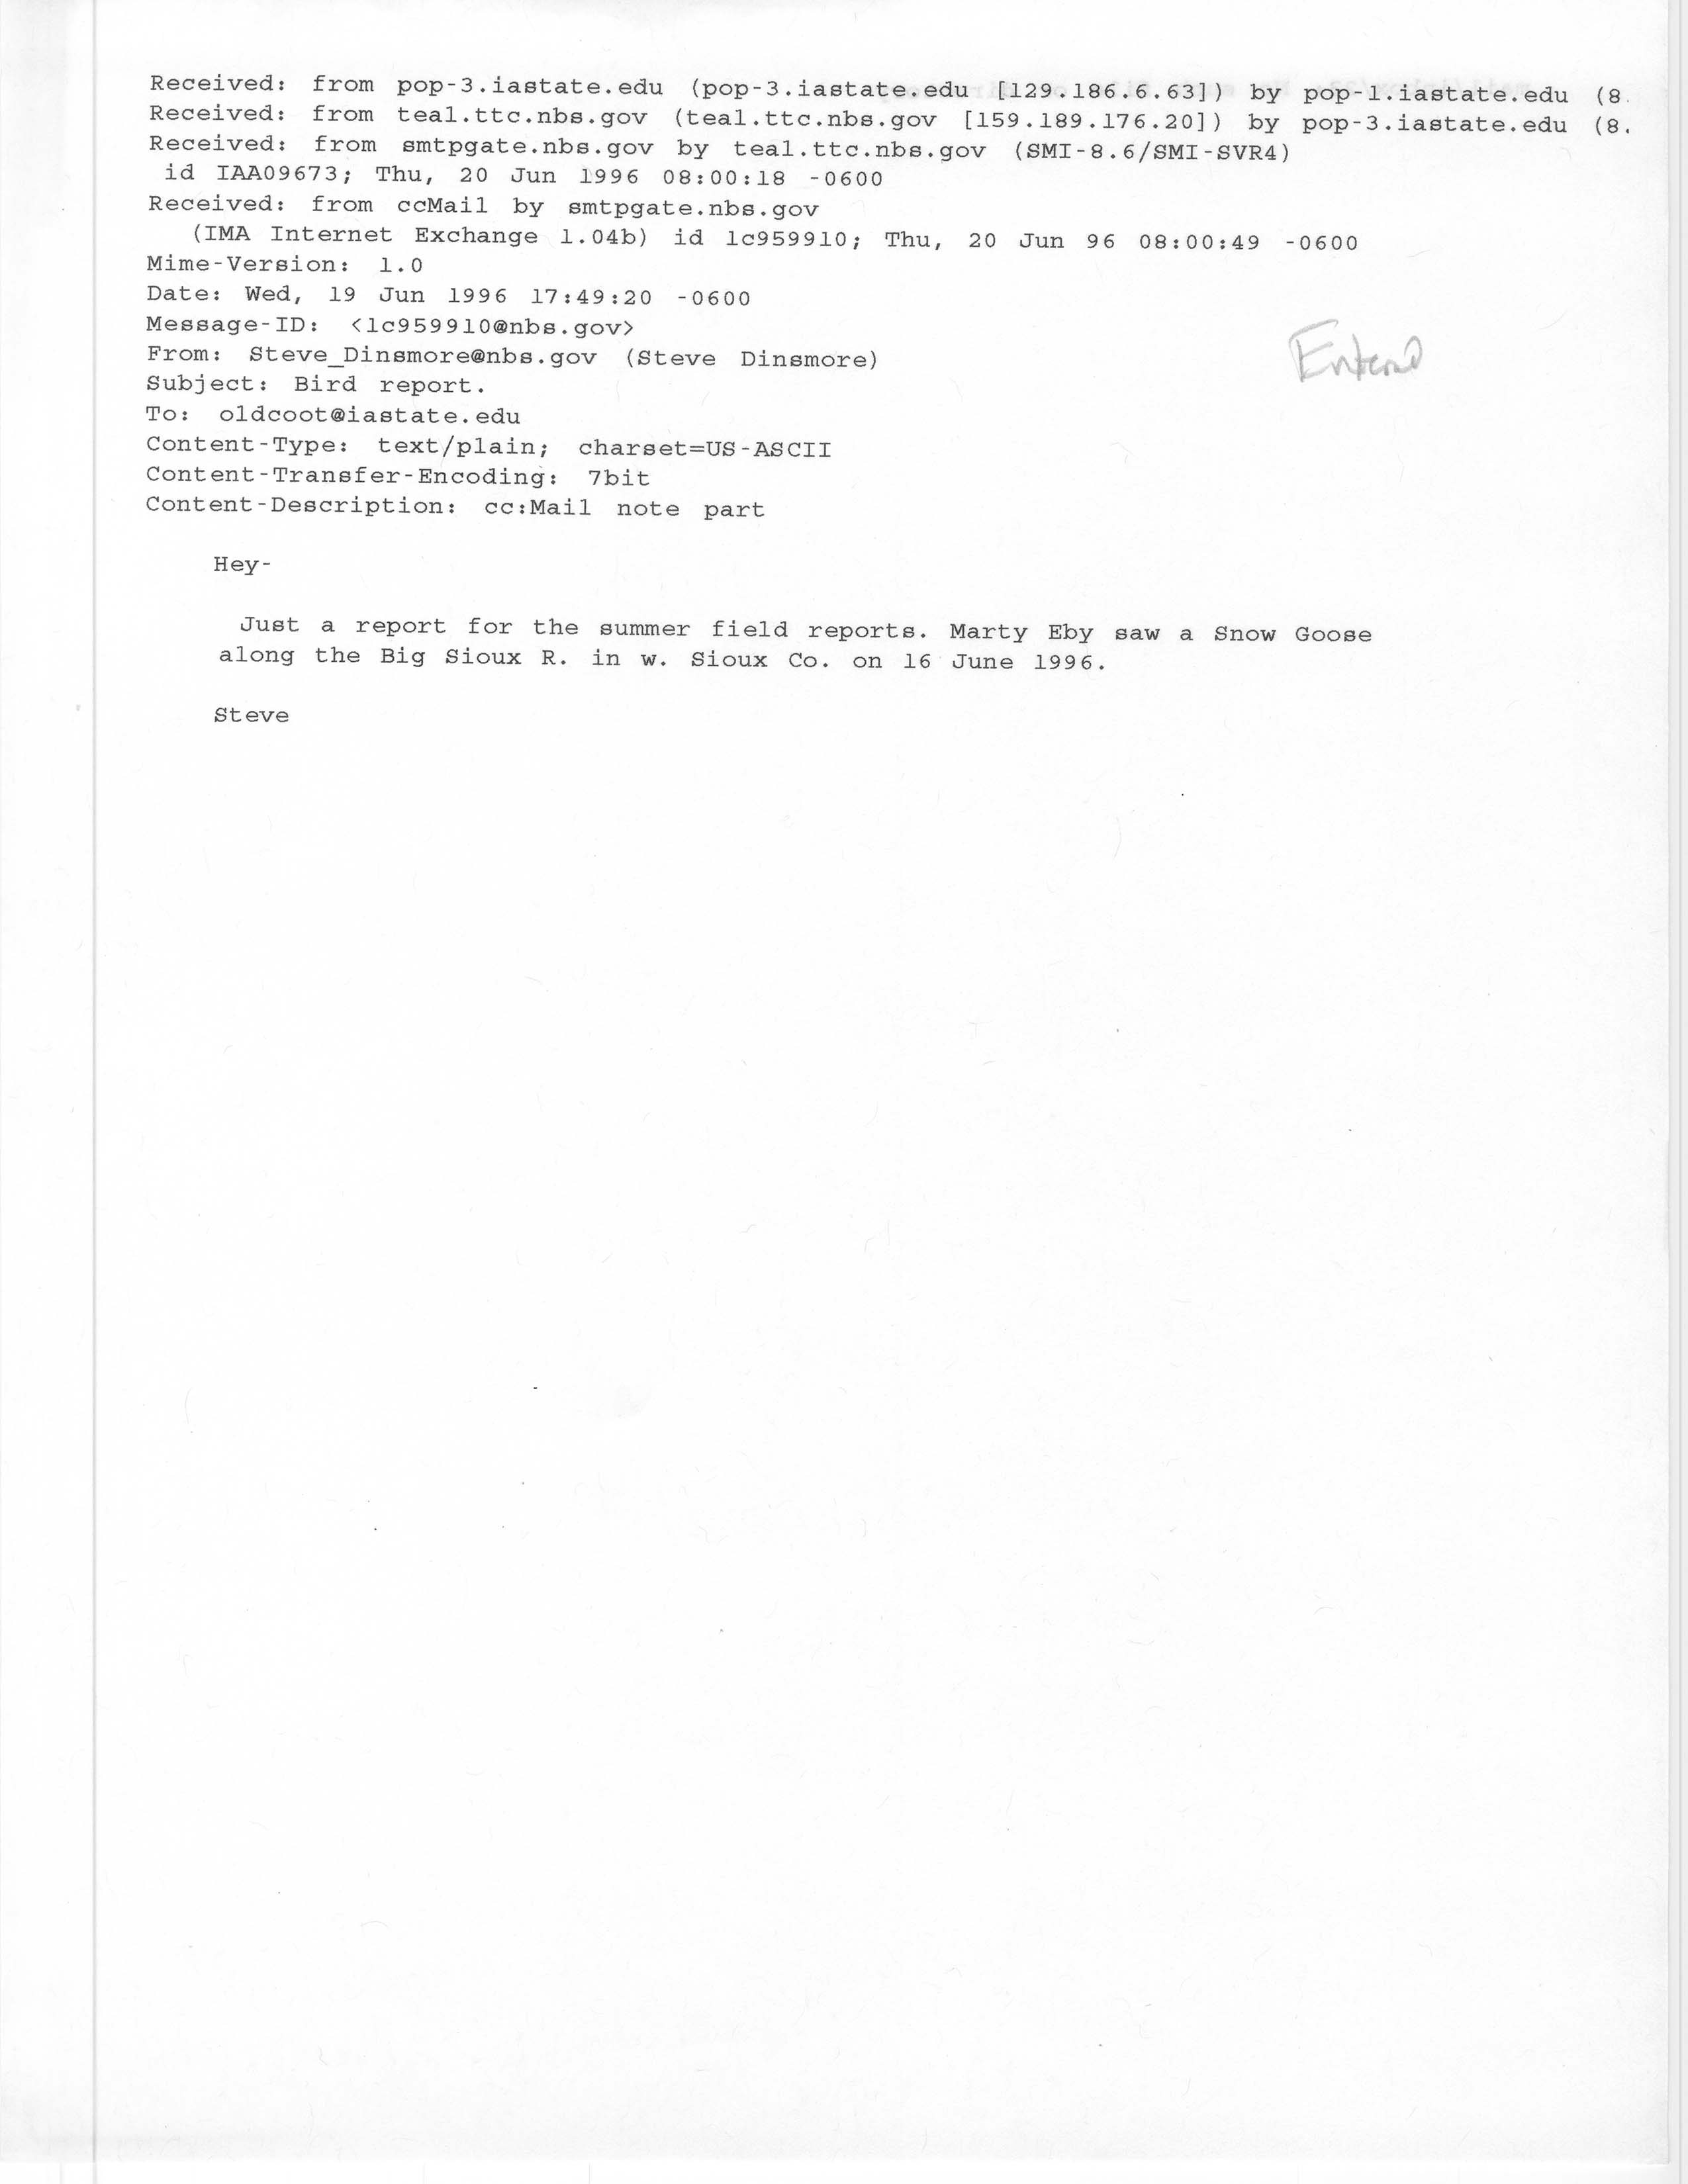 Stephen J. Dinsmore email to James J. Dinsmore regarding a Snow Goose sighting, June 19, 1996